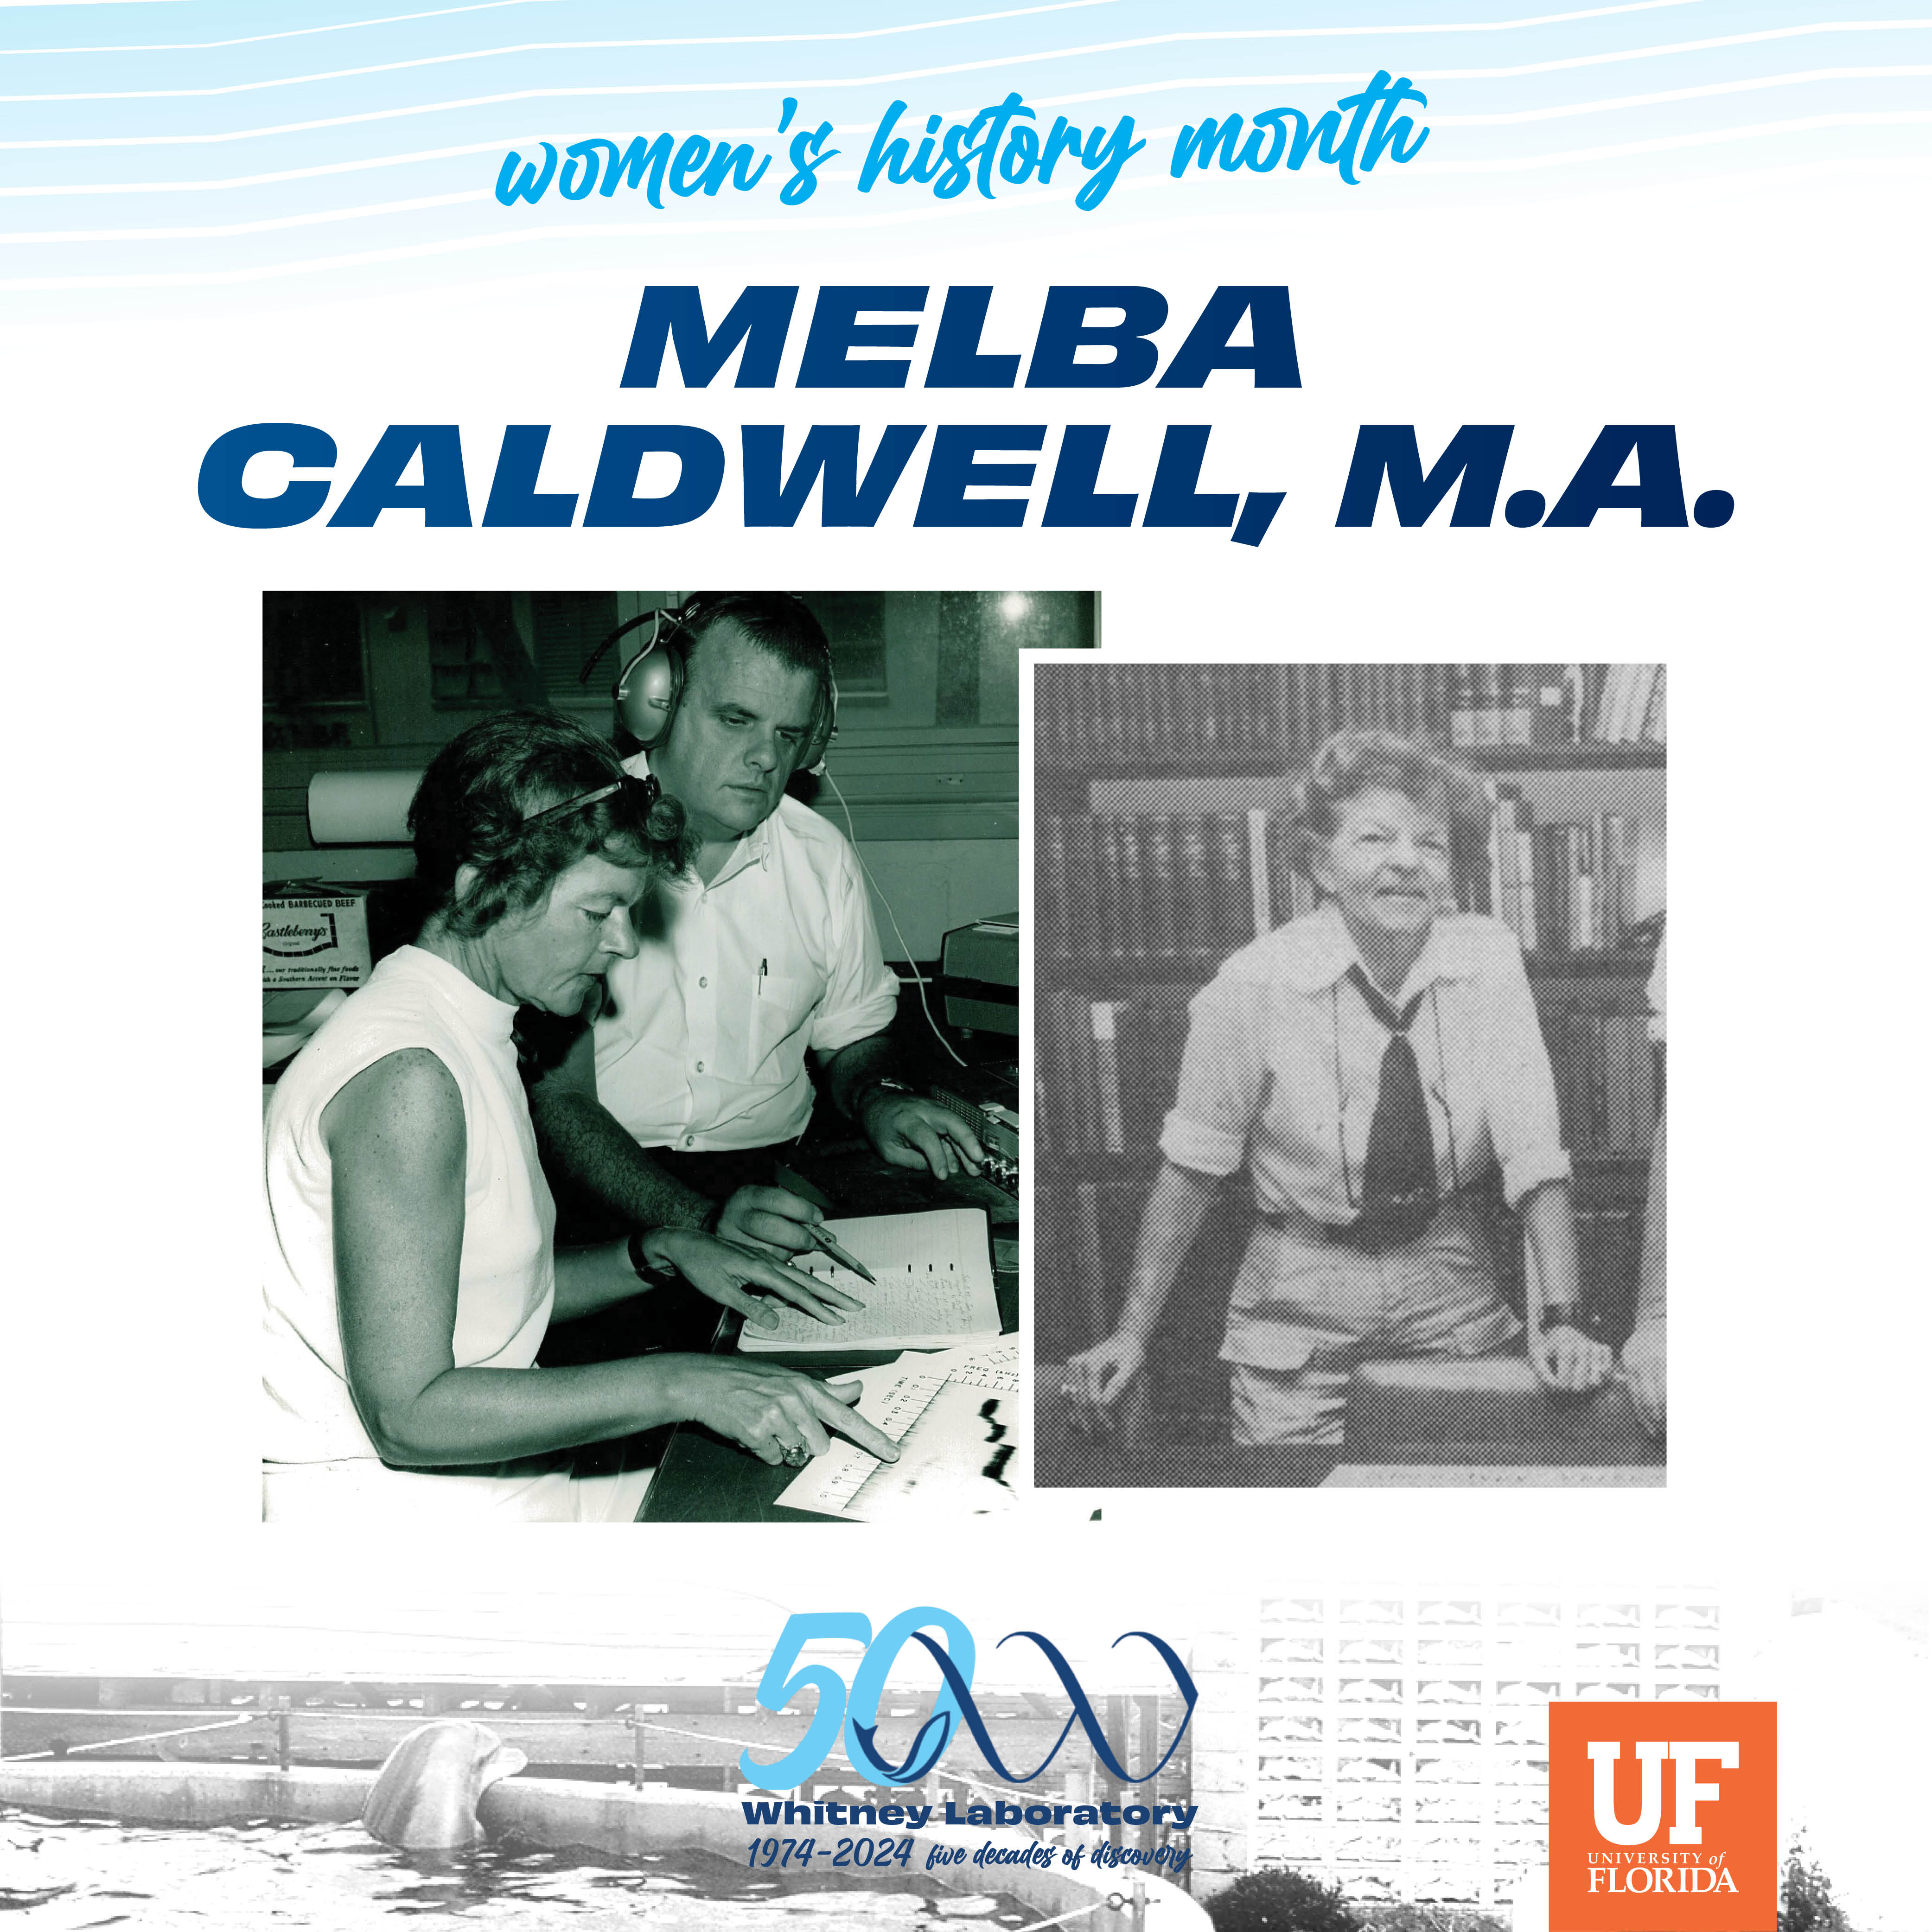 Women's History Month - Melba Caldwell, M.A.